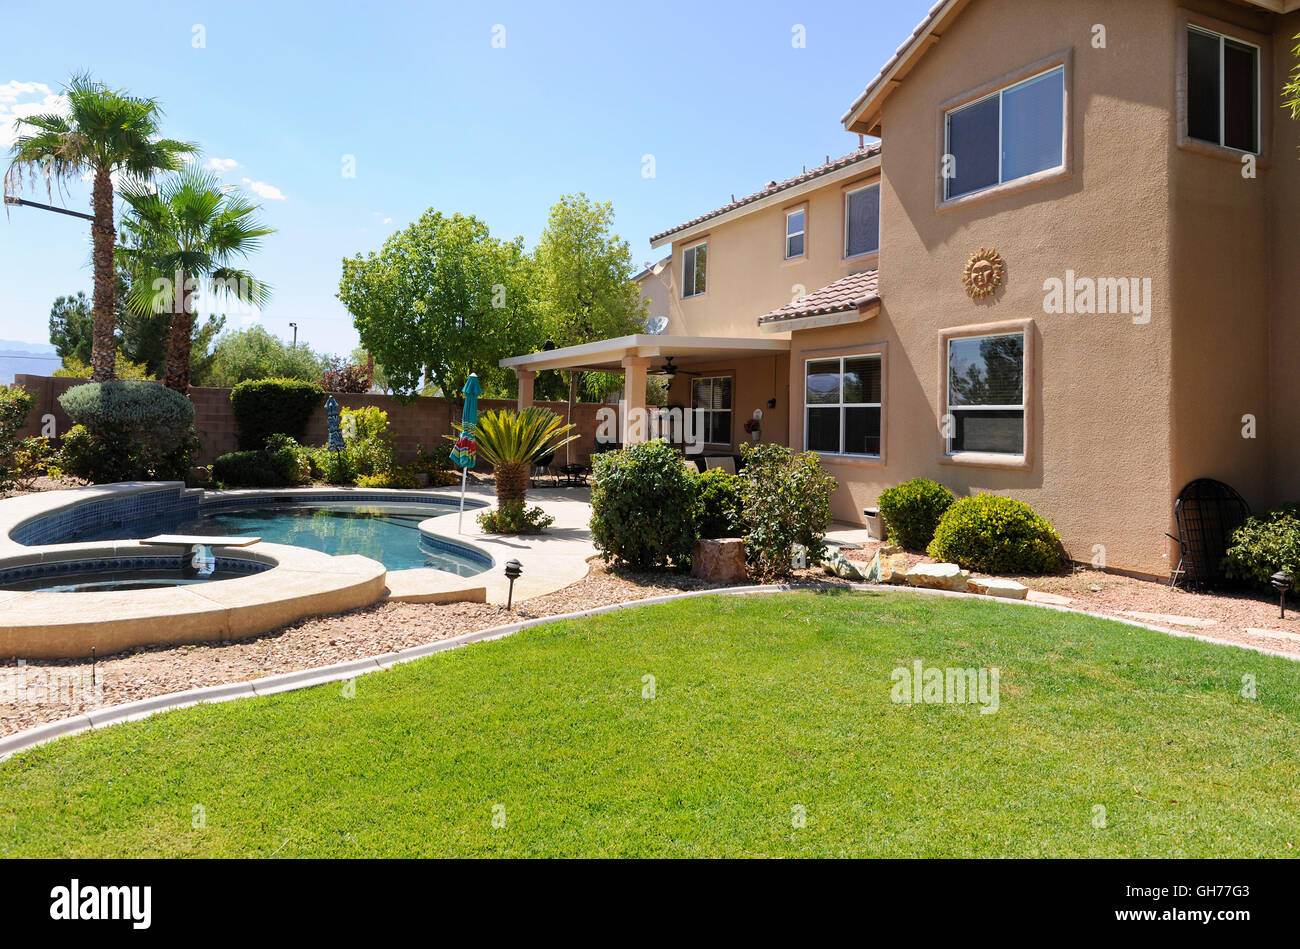 Residential backyard swimming pool in the desert southwest USA Stock Photo